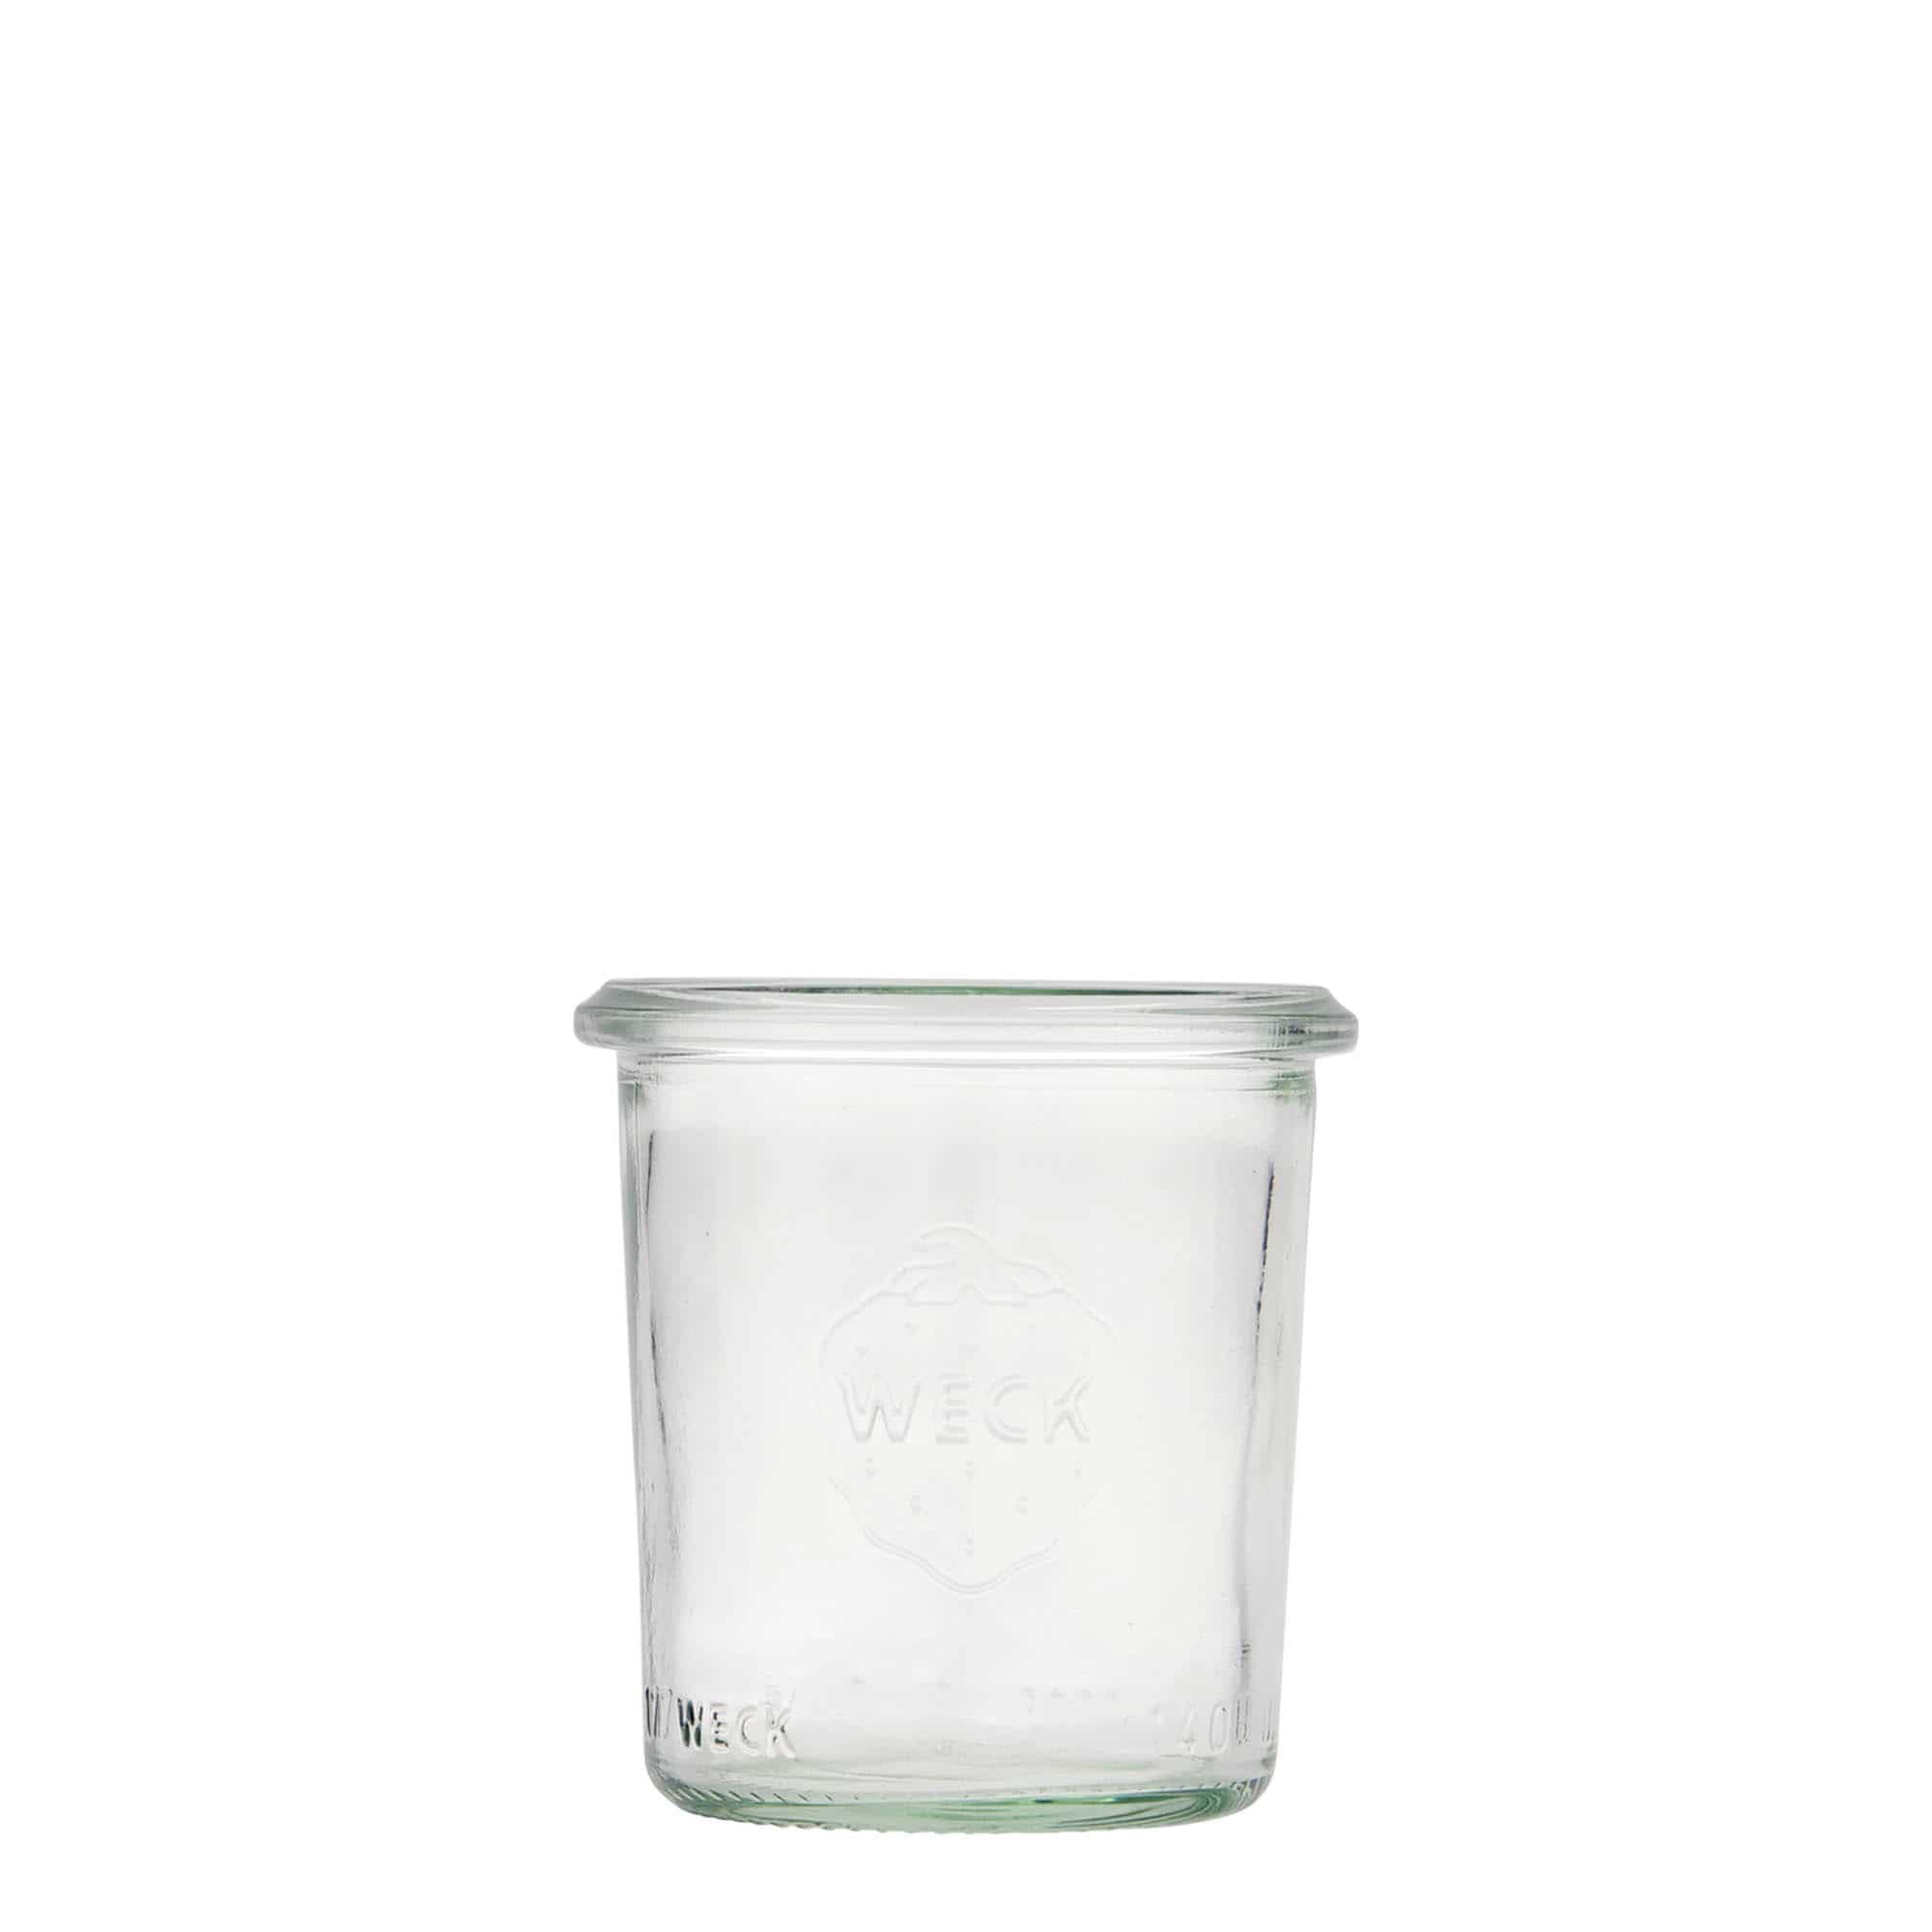 140 ml WECK cylindrical jar, closure: round rim